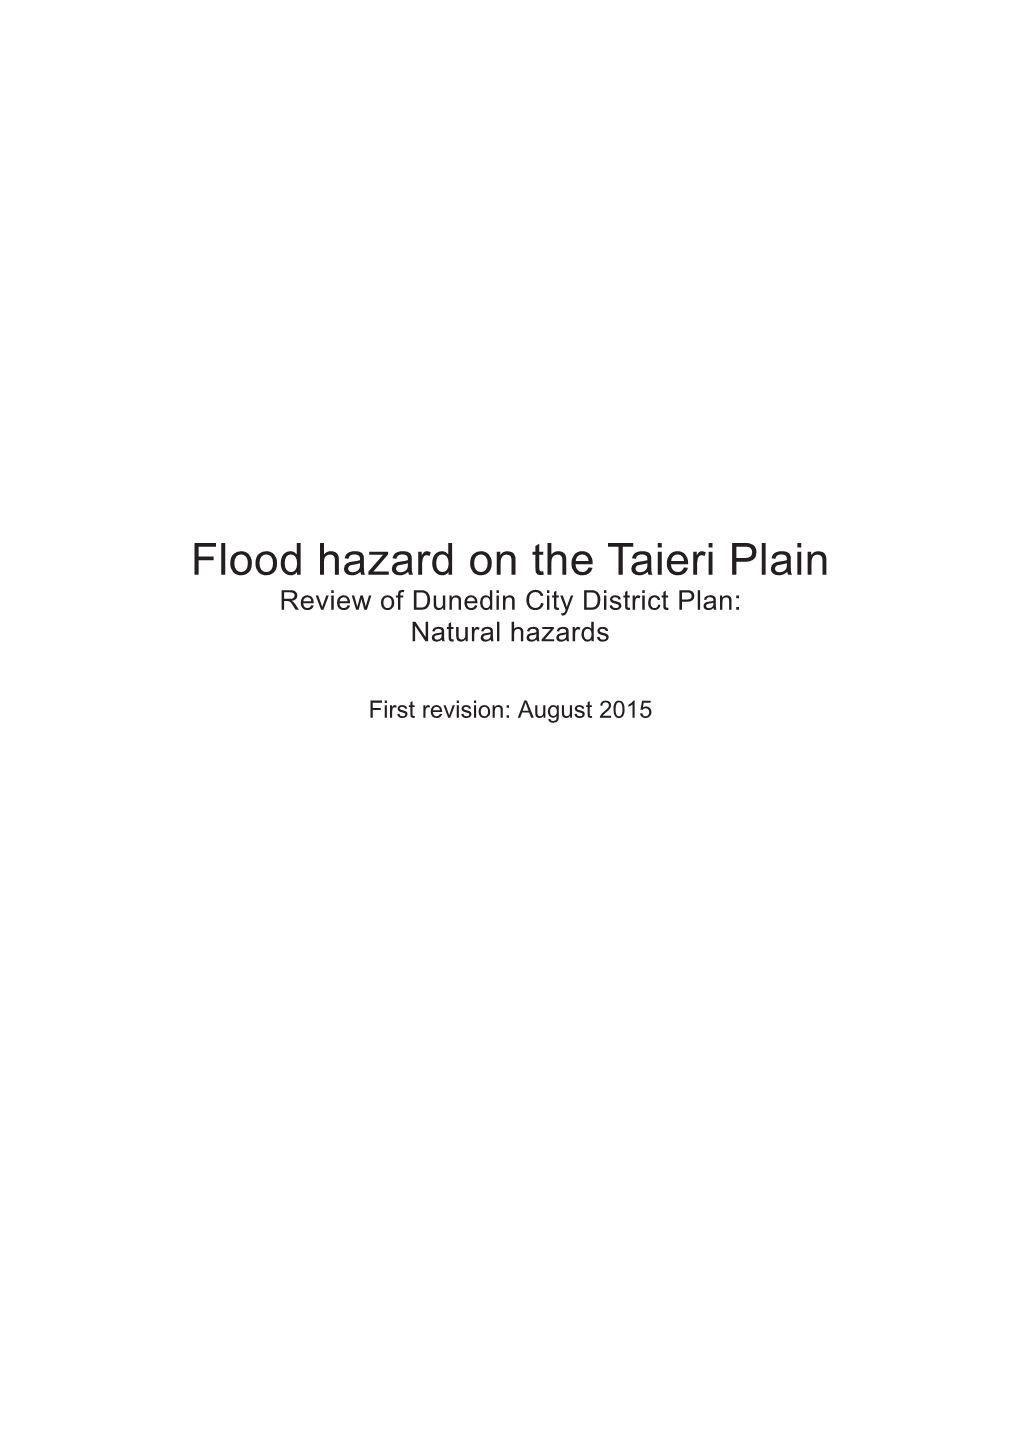 Flood Hazard on the Taieri Plain Review of Dunedin City District Plan: Natural Hazards